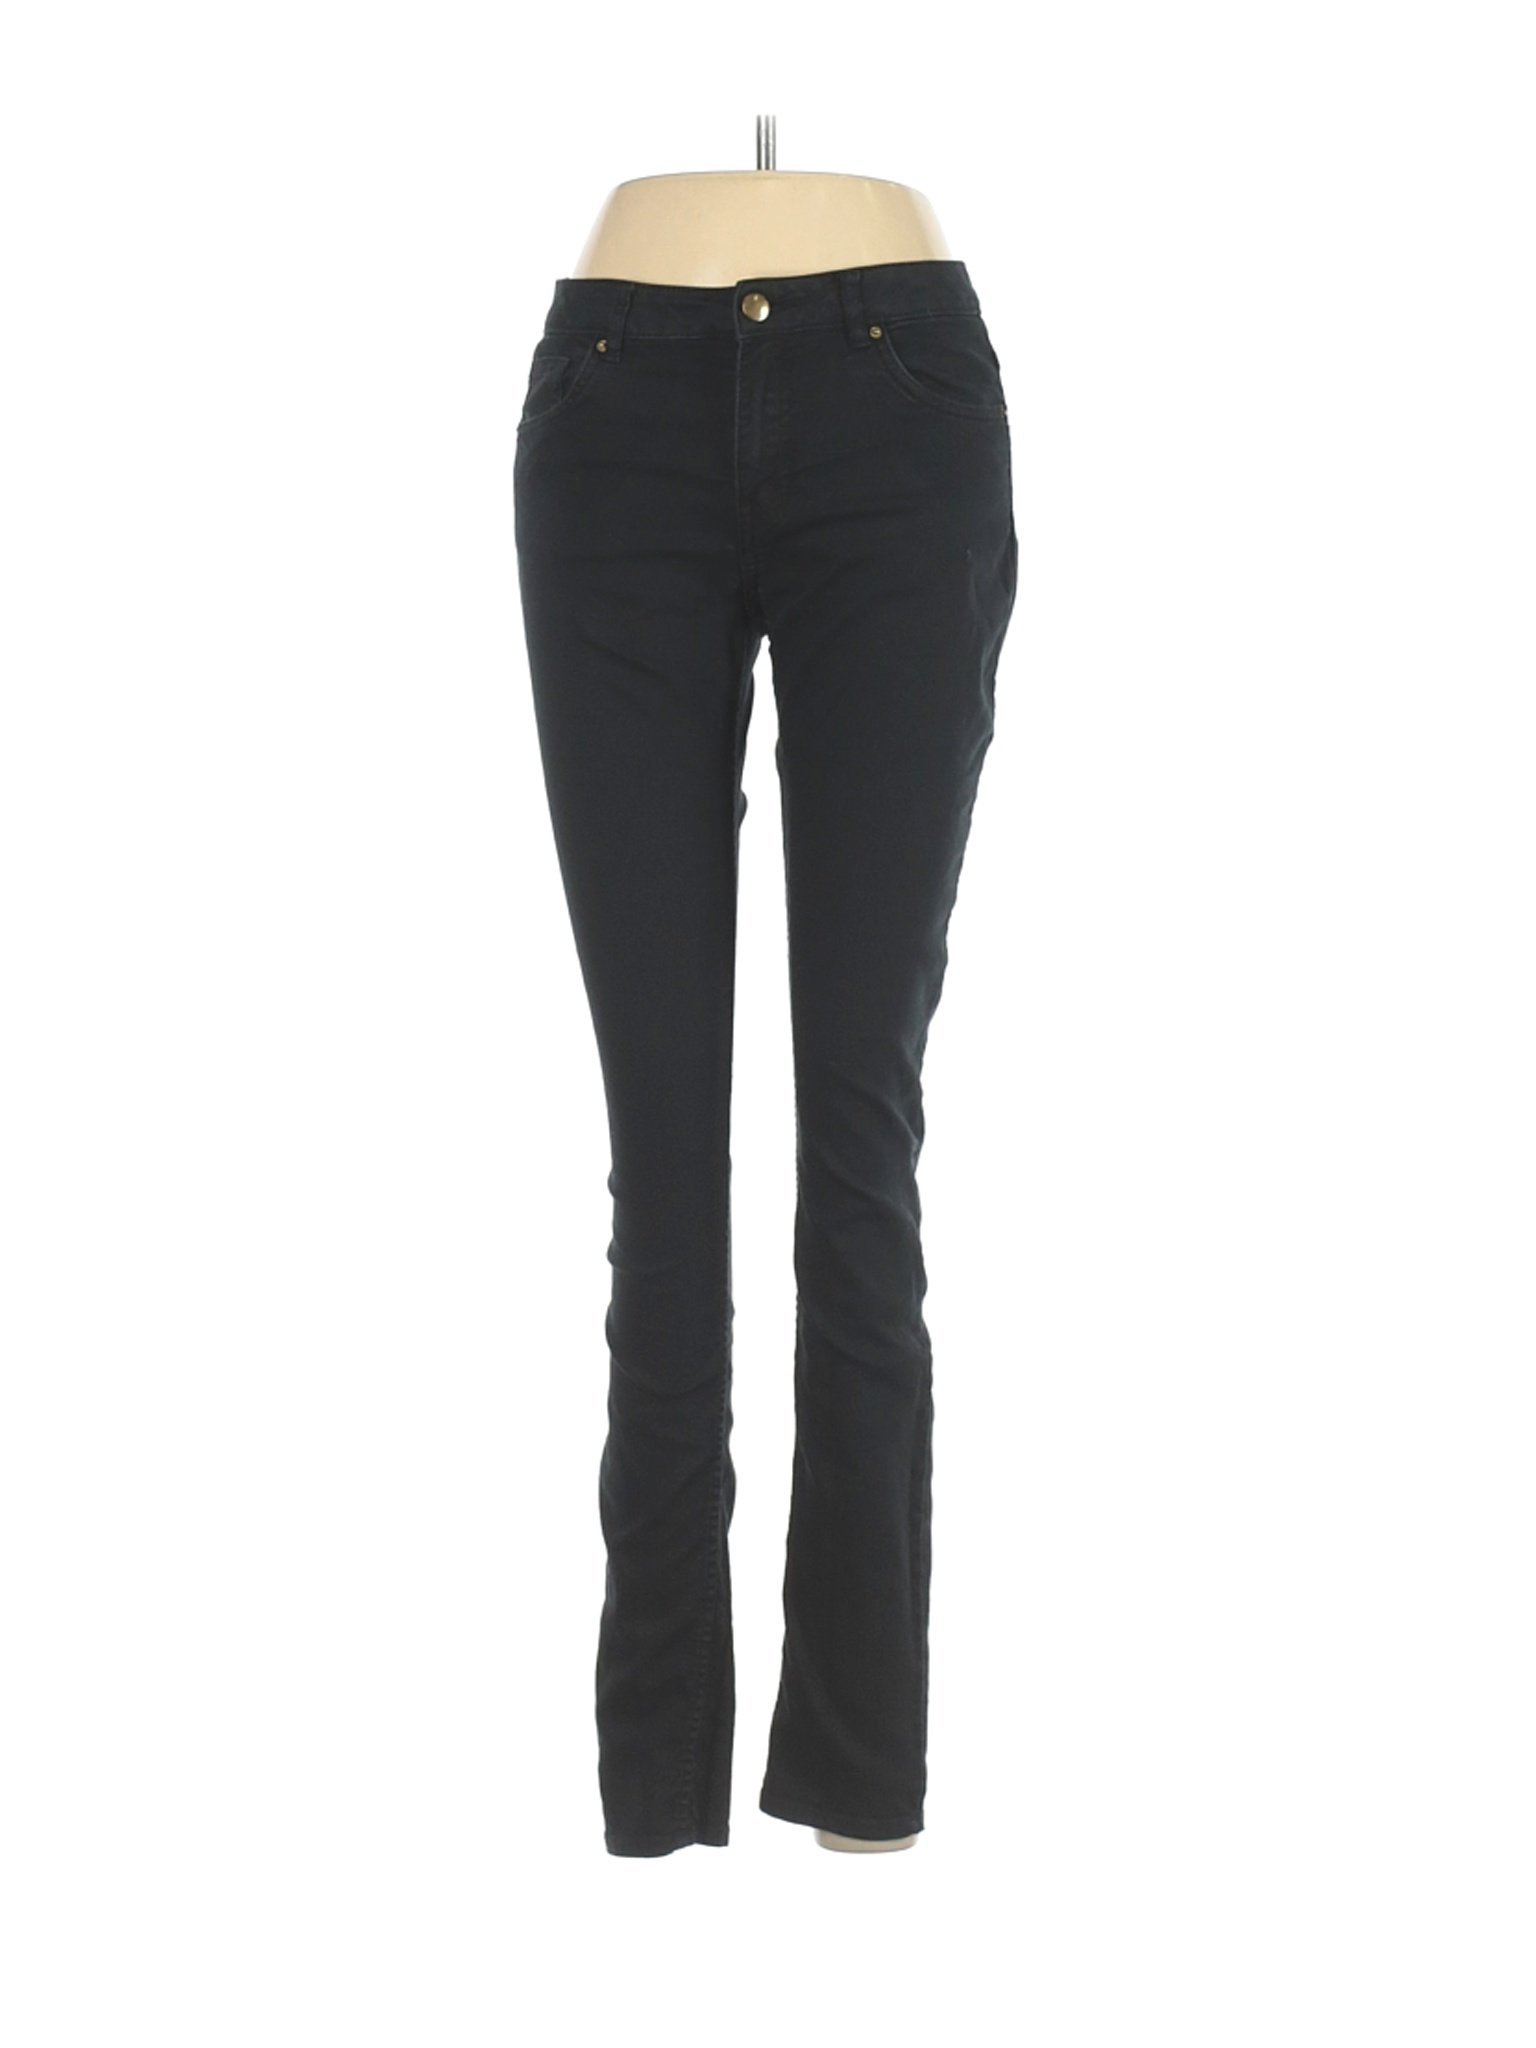 H&M Women Black Jeans 6 | eBay